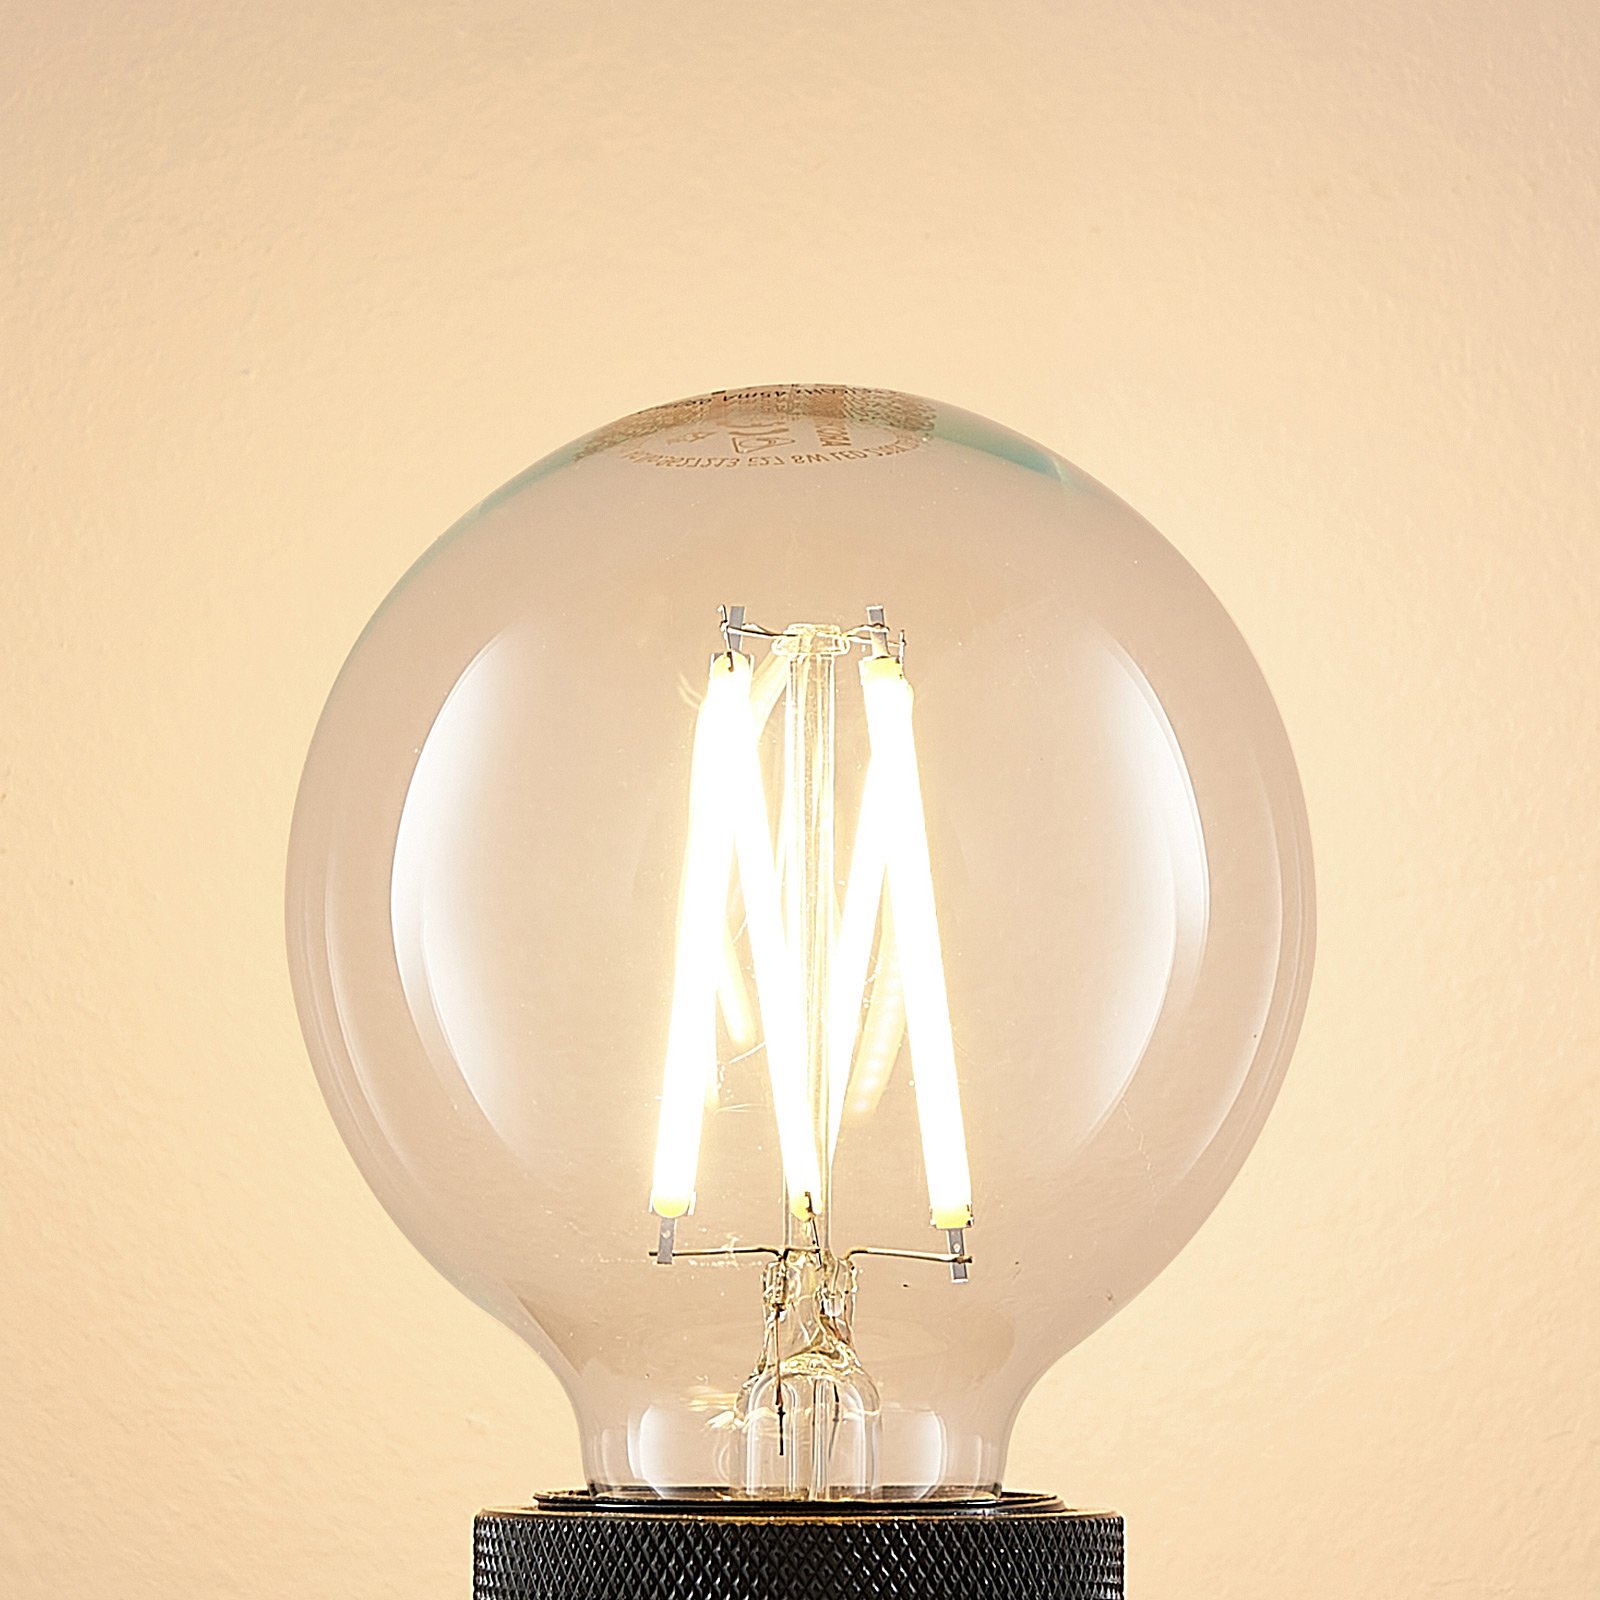 LED-Lampe E27 8W G80 2.700K Filament dimmbar klar